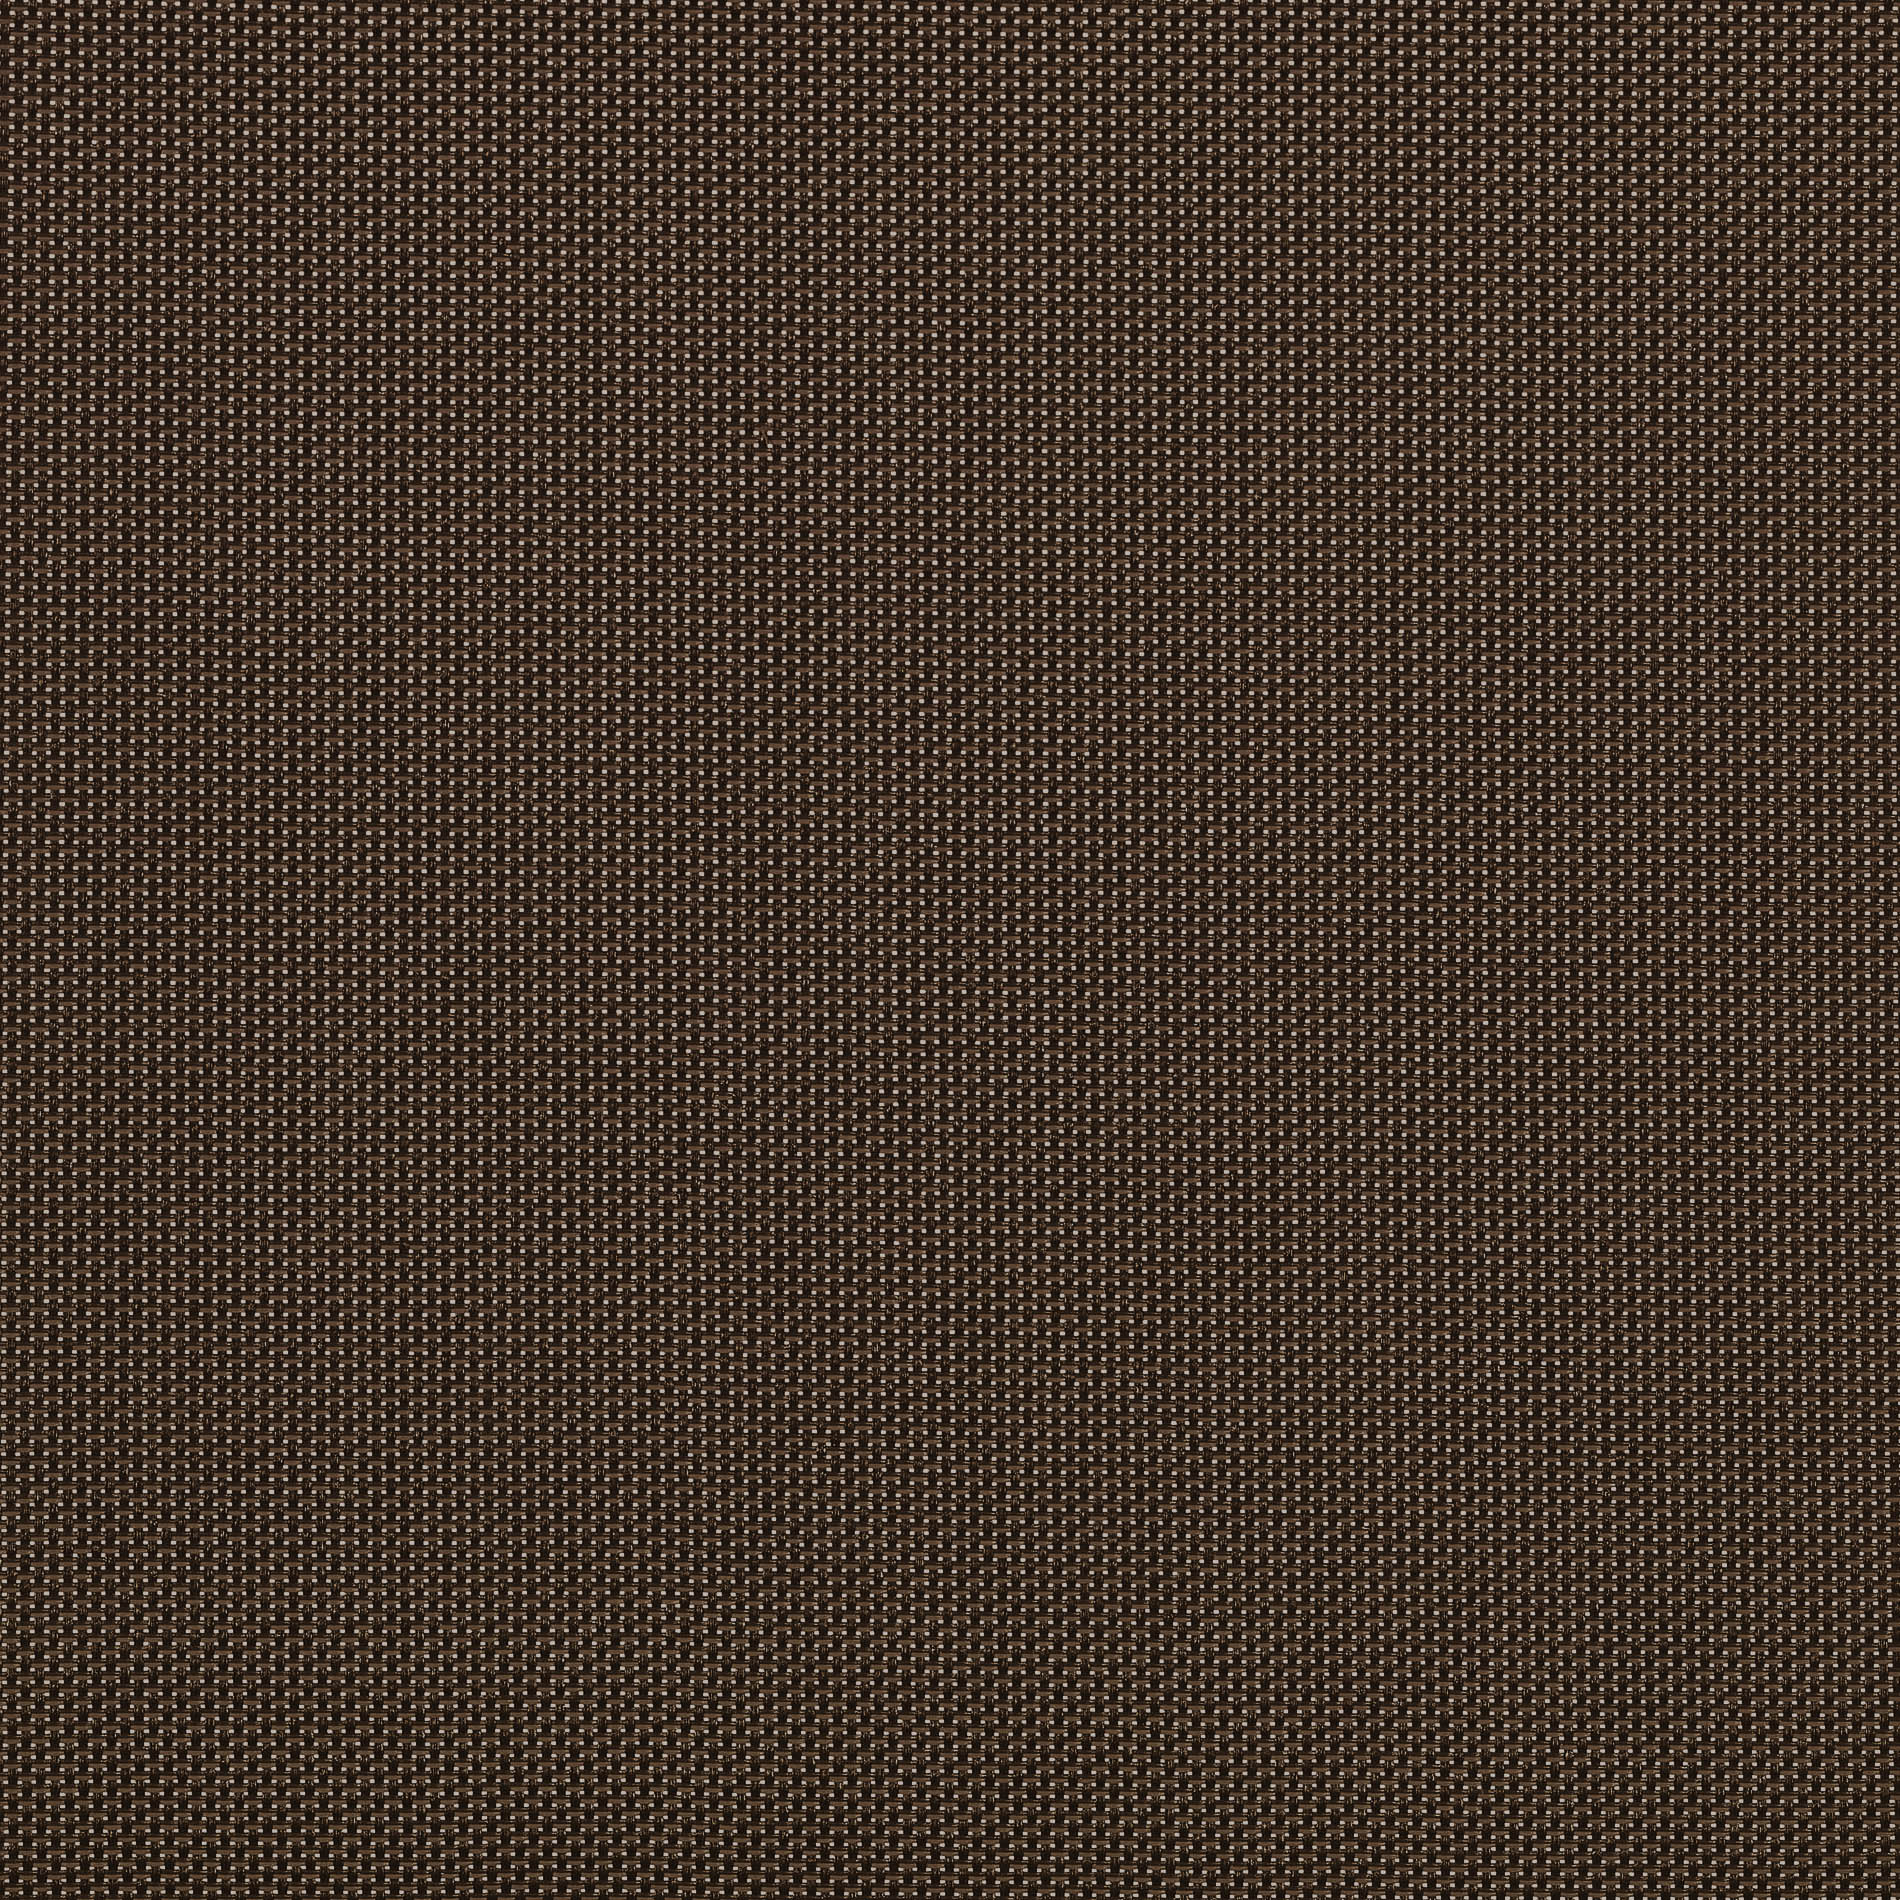 Altex - Fabric - NATTÉ 10% - Charcoal/Cocoa-Fawn - 30M687_TEMP_3